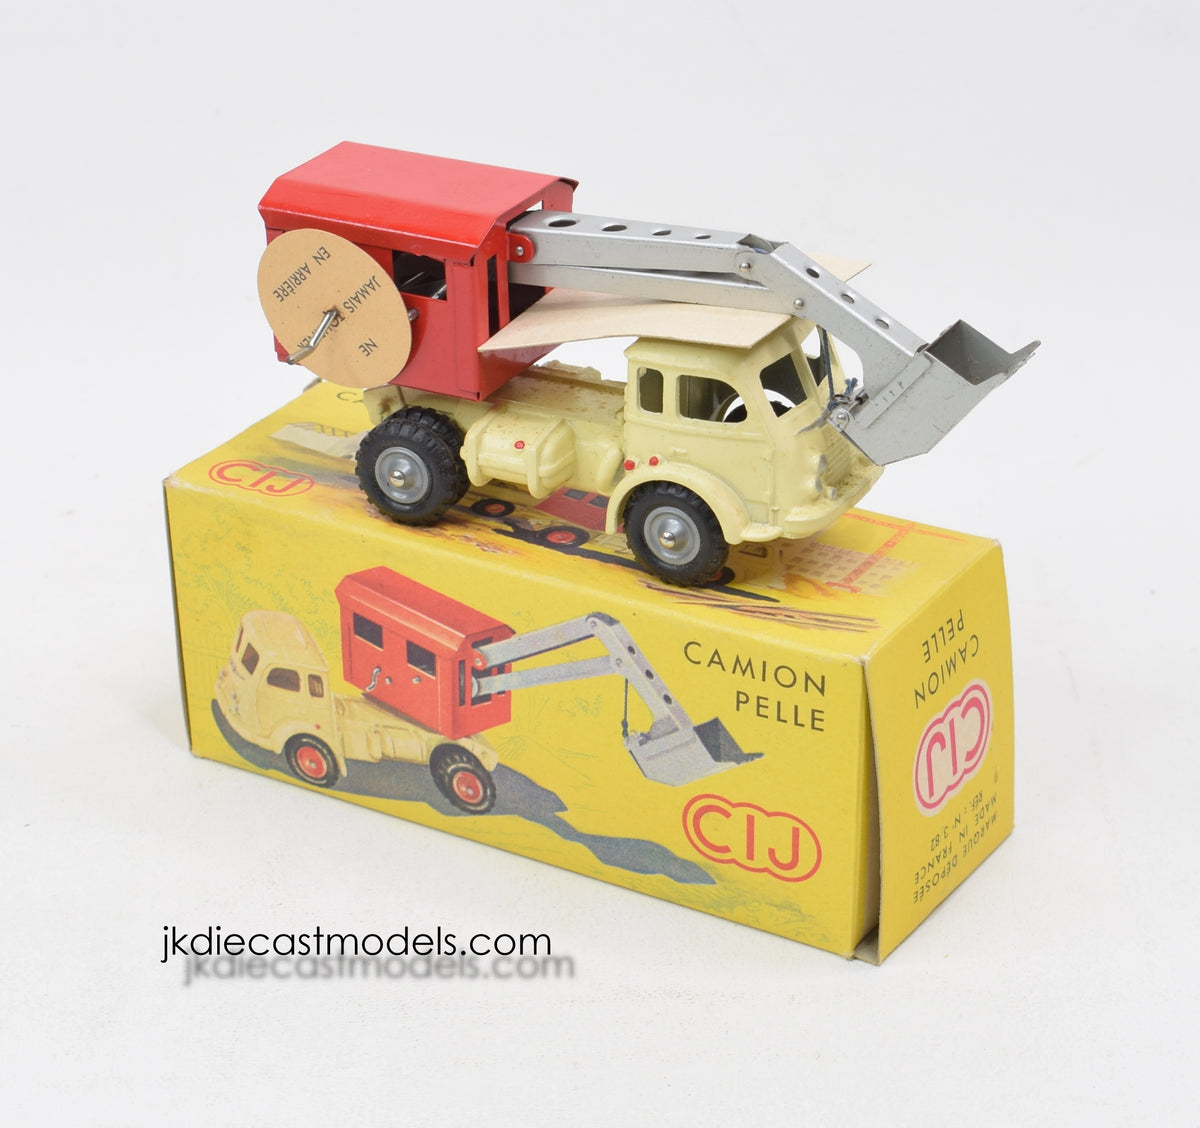 CIJ 3/82 Camion Pelle Virtually Mint/Nice box 'Carlton' Collection